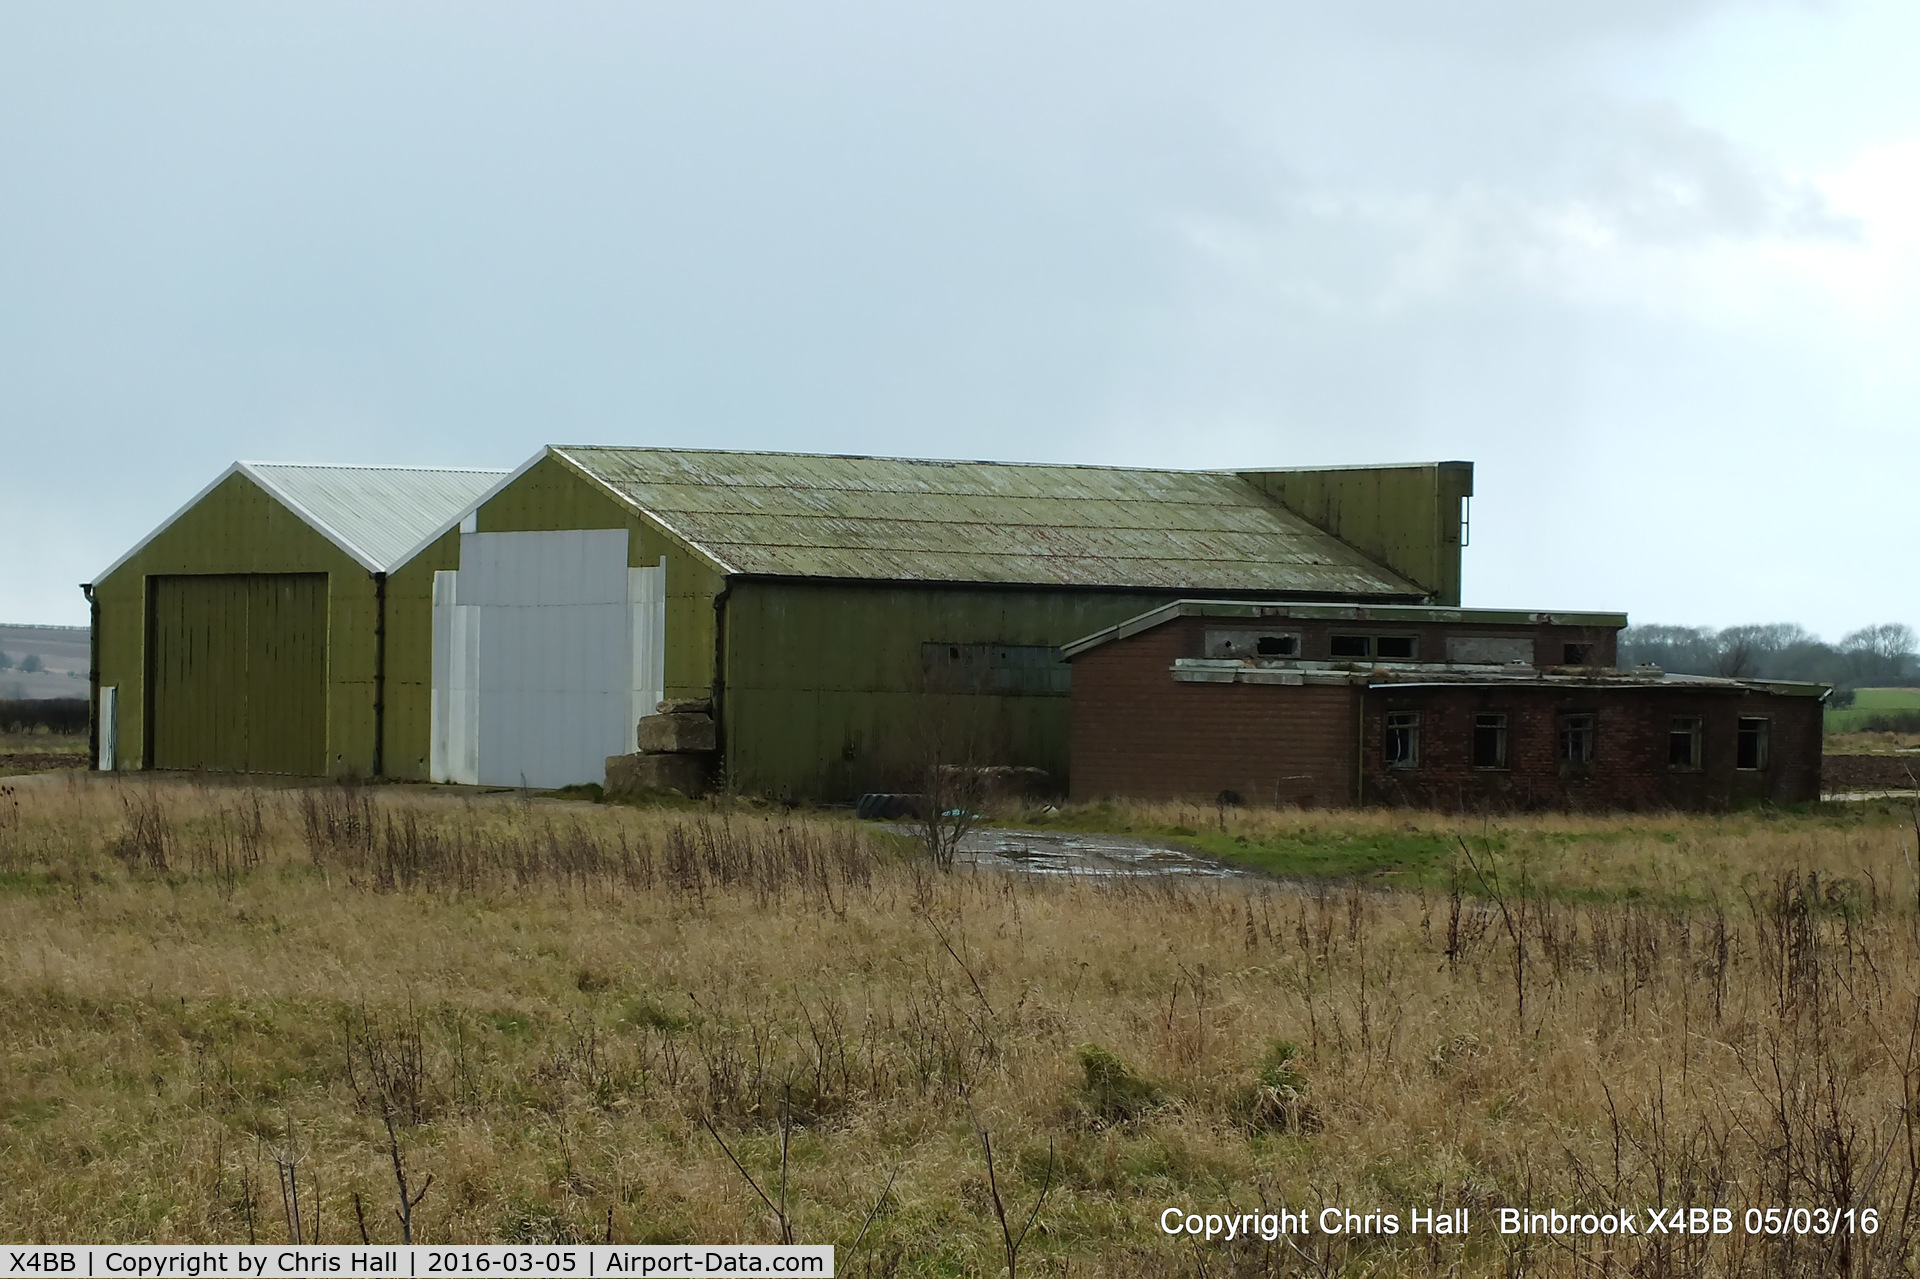 X4BB Airport - QRA shed at the former RAF Binbrook